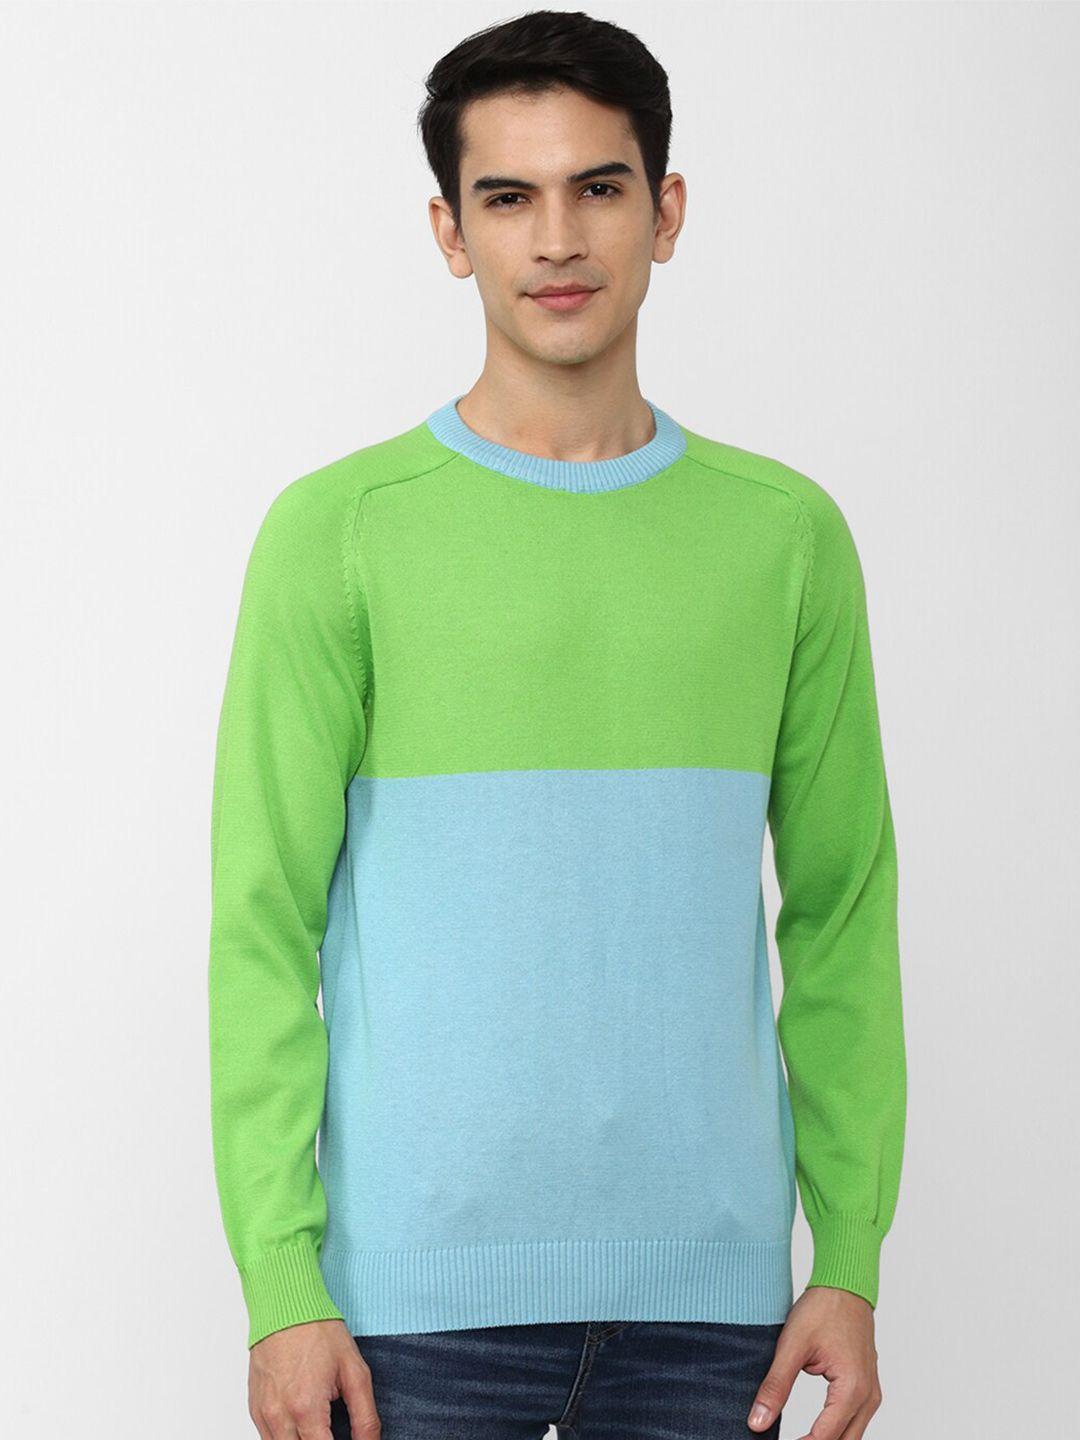 forever-21-men-green-&-blue-colourblocked-sweatshirt